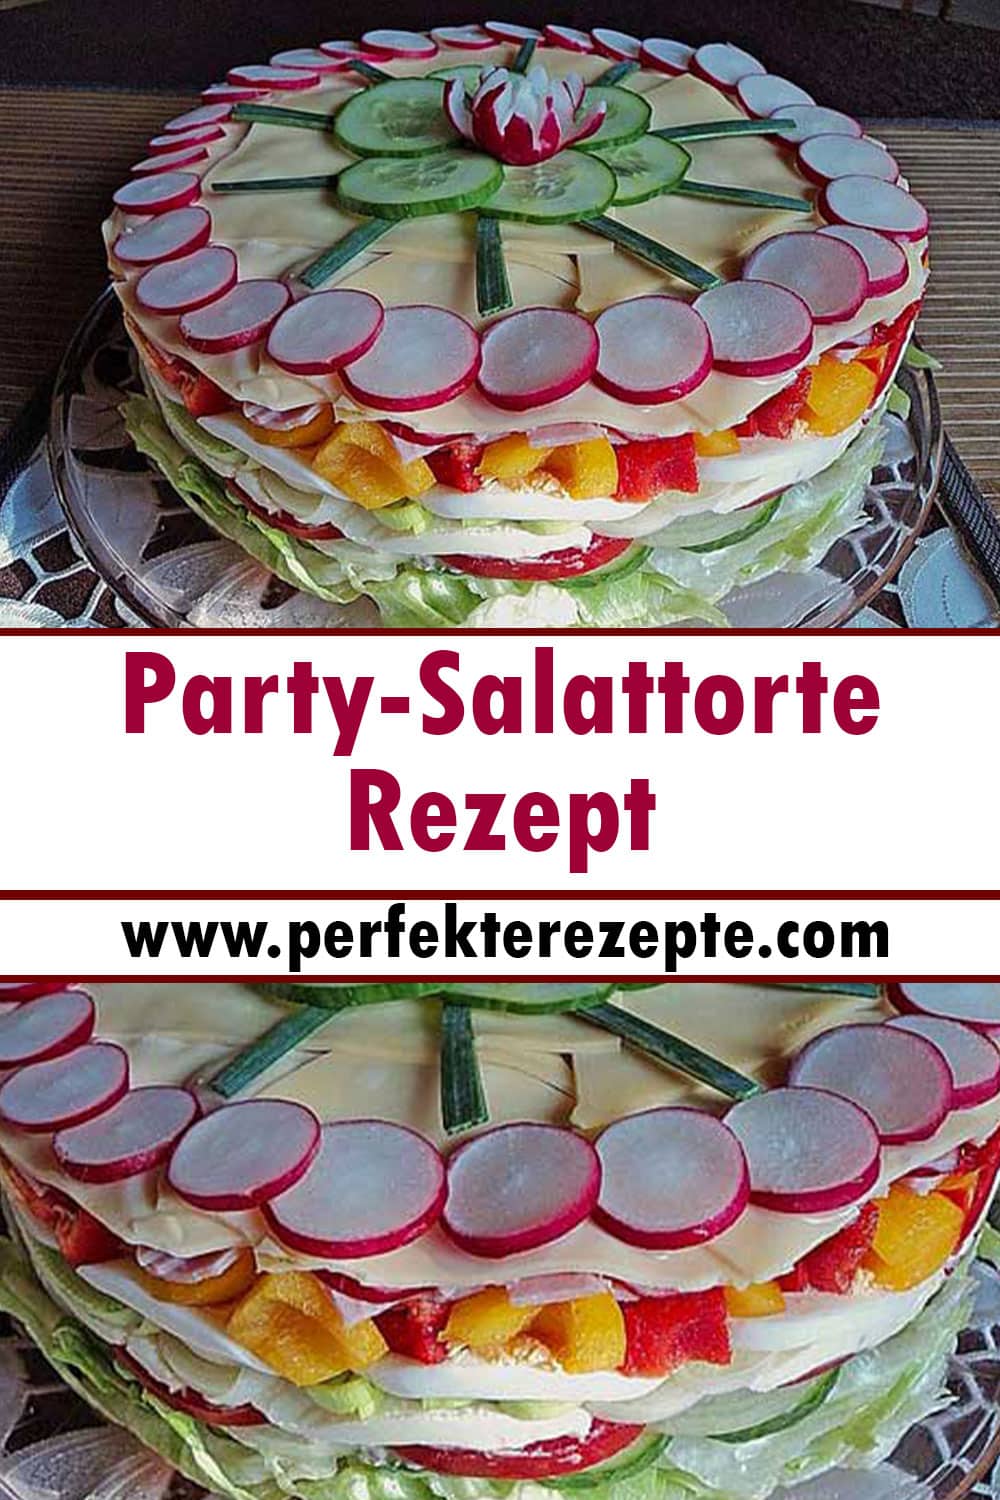 Party-Salattorte Rezept